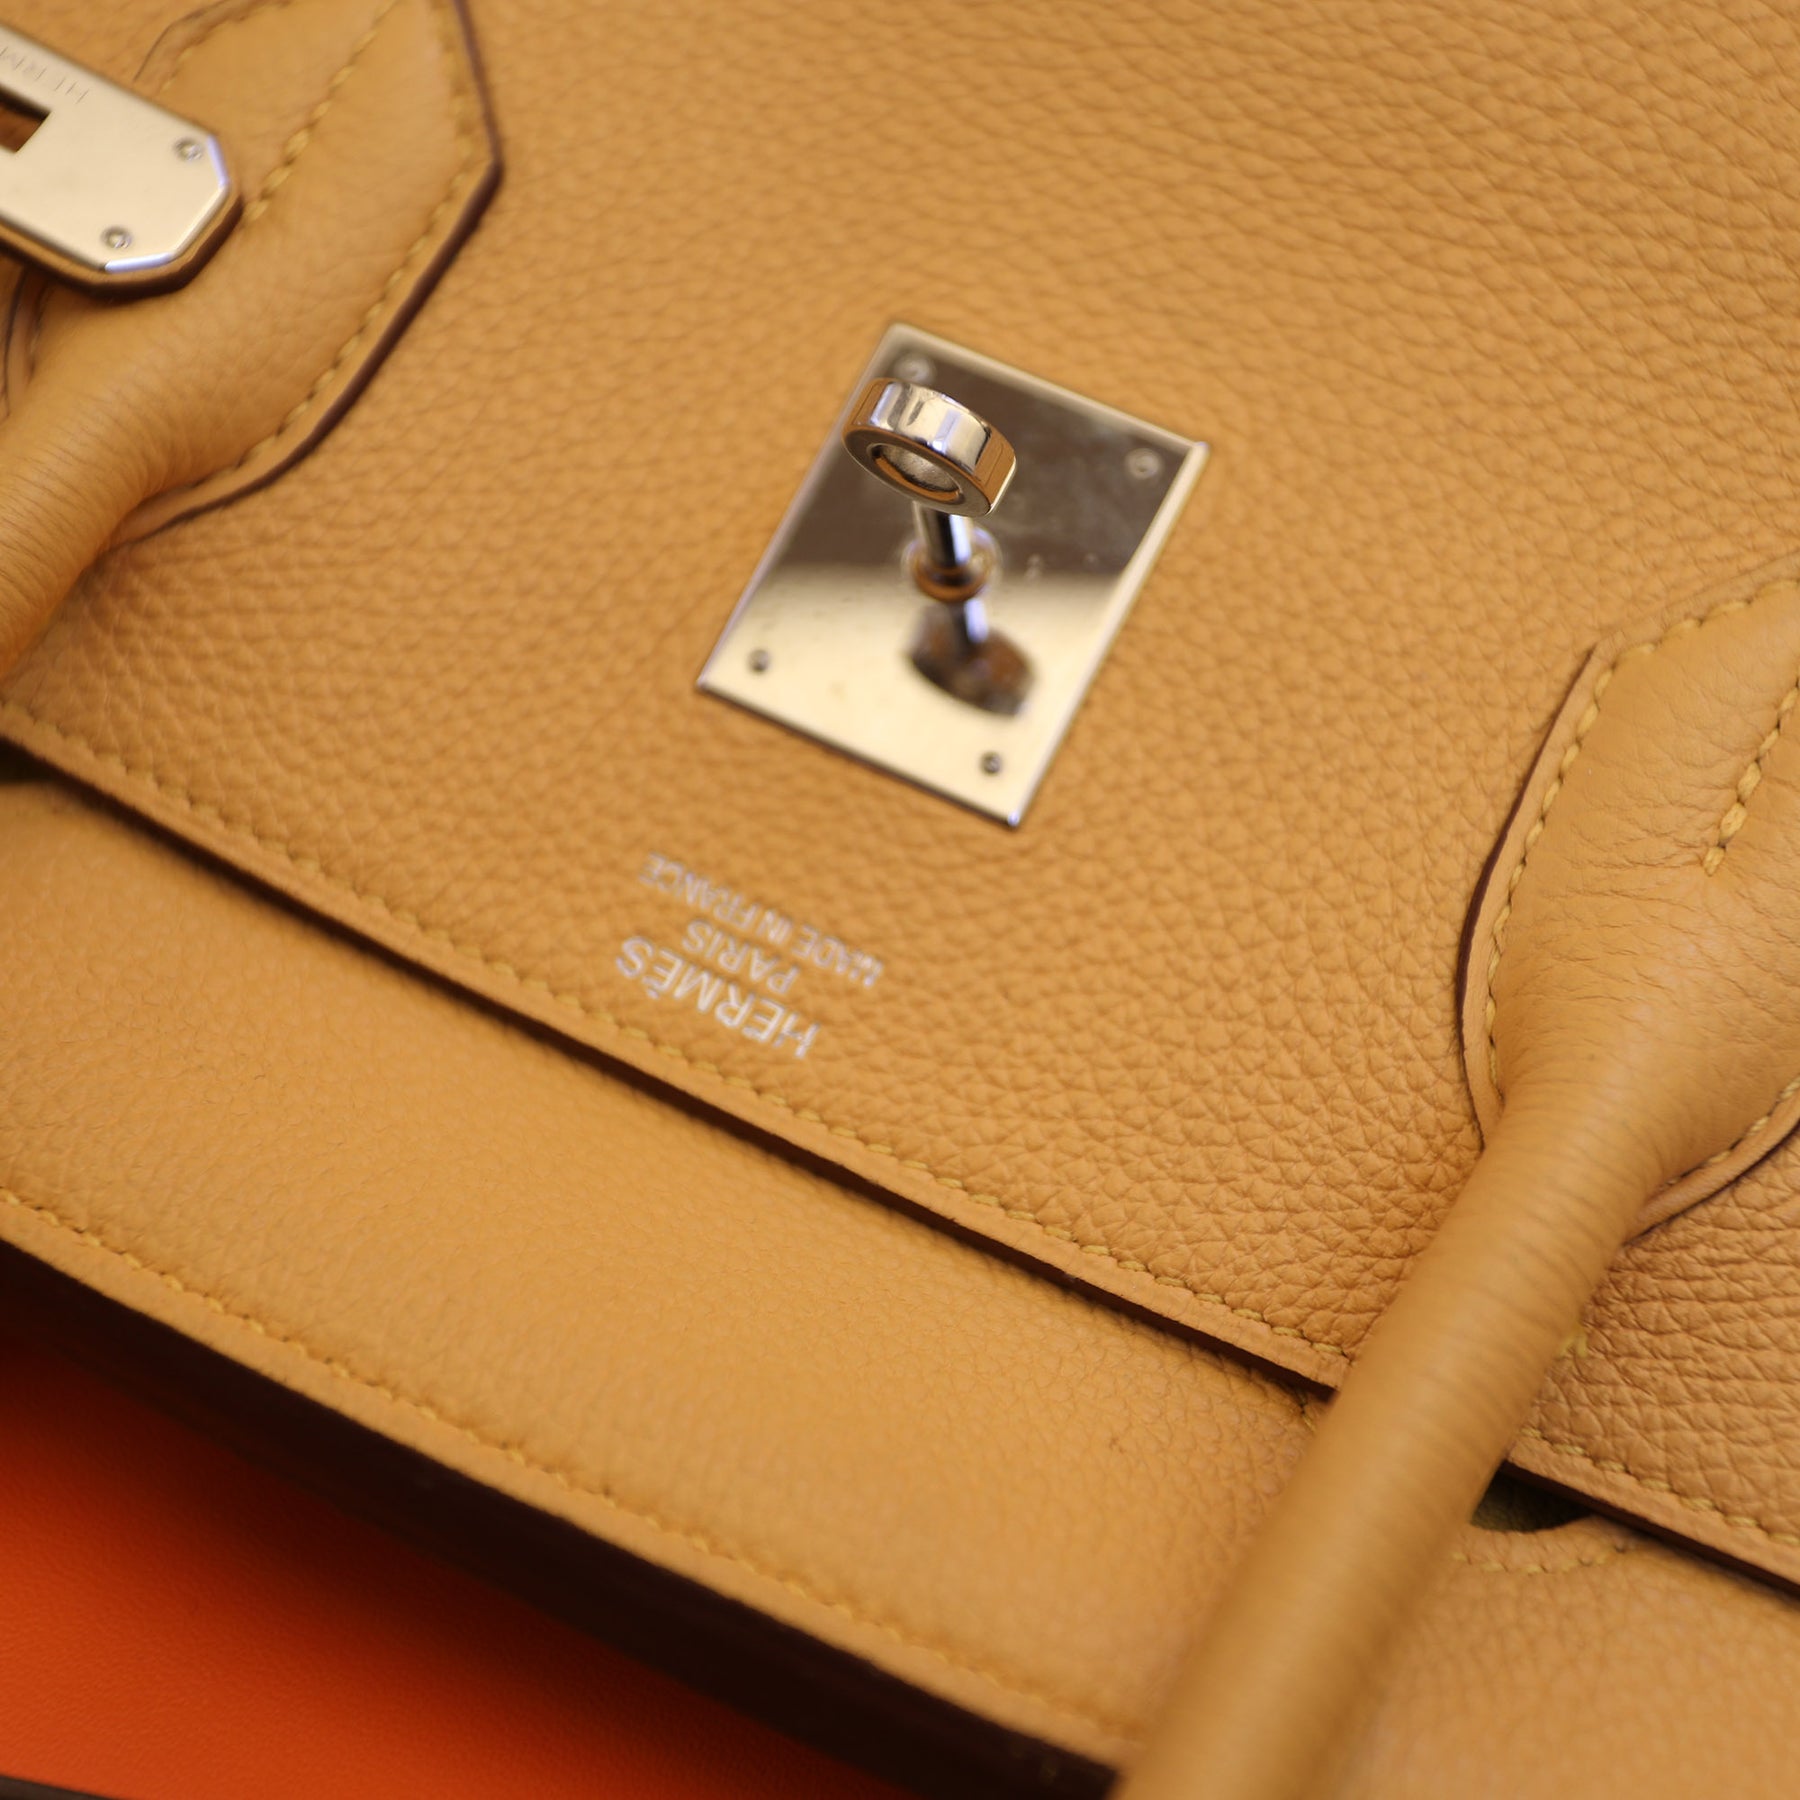 Hermès Stunning Hermes Birkin handbag 40 cm black togo leather